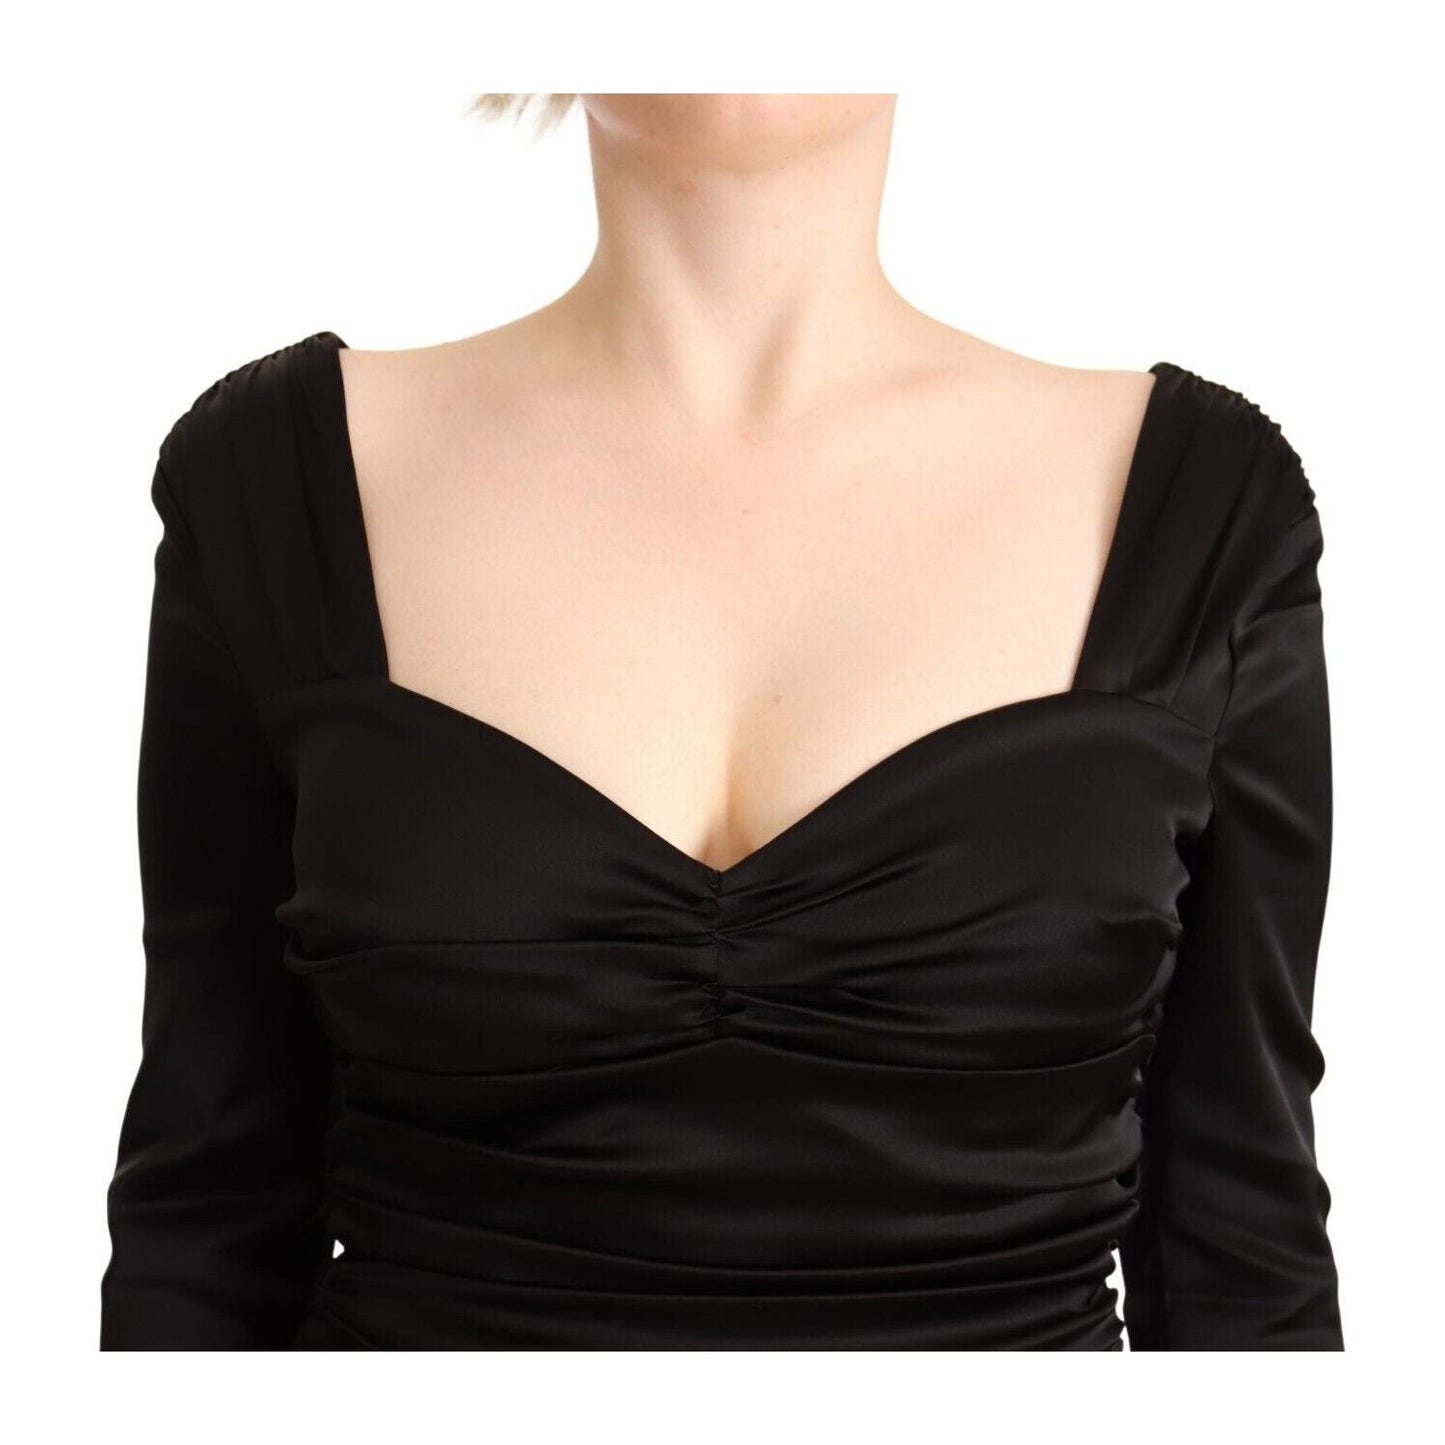 Roberto Cavalli Elegant Black Sweetheart Sheath Dress black-long-sleeves-bodycon-acetate-dress WOMAN DRESSES s-l1600-3-71-cc3eed40-997.jpg